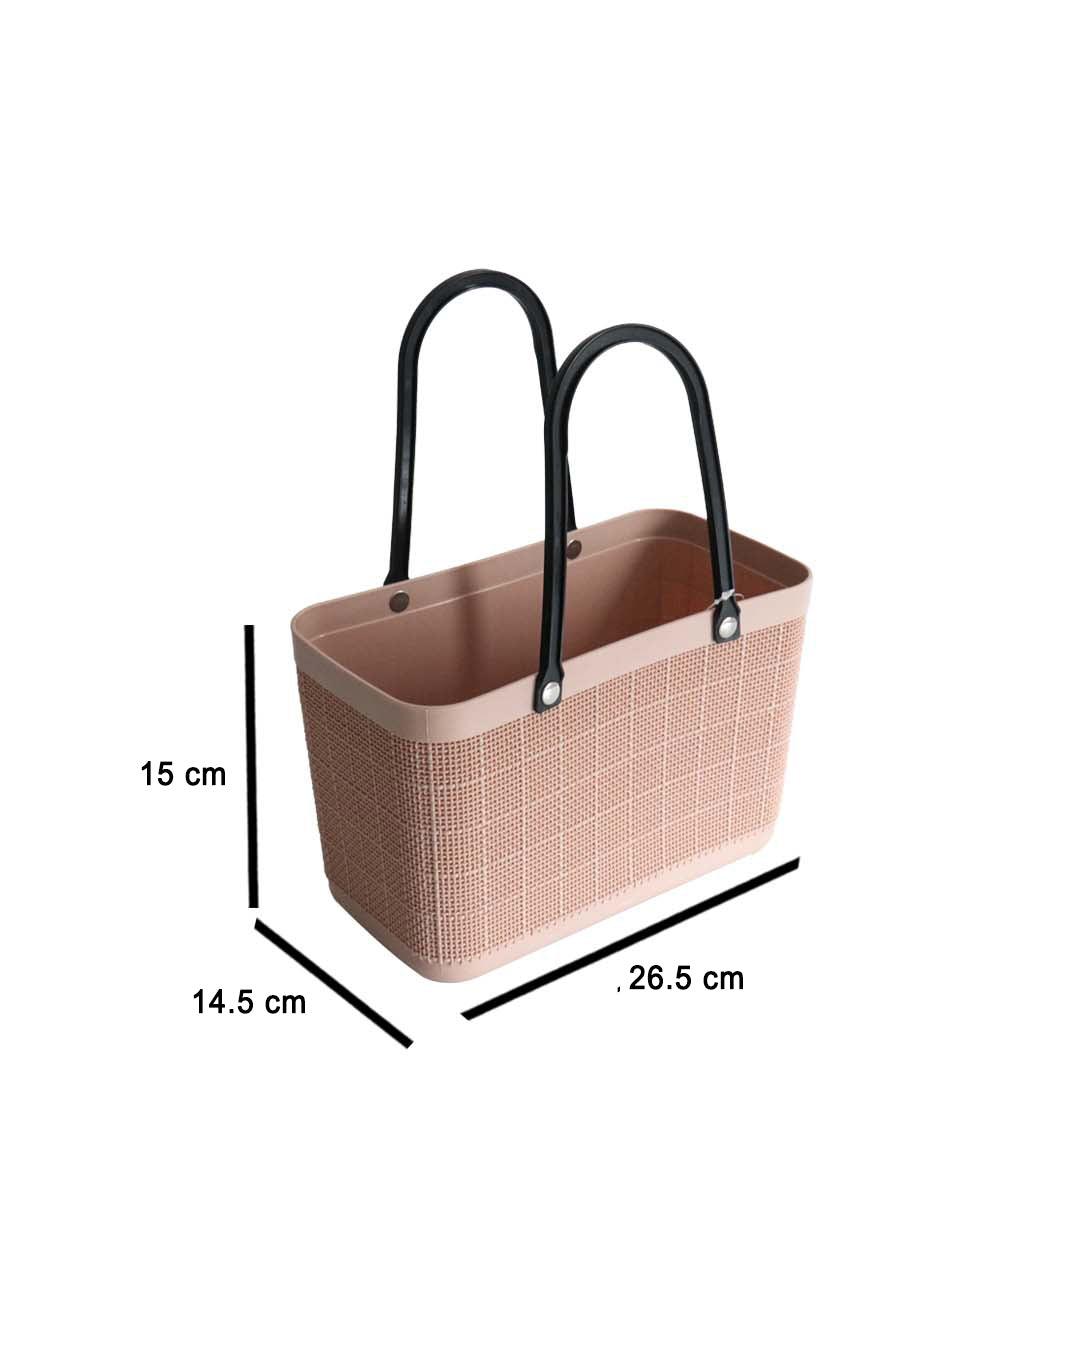 Basket Bag with Handles, Peach, Plastic - MARKET 99